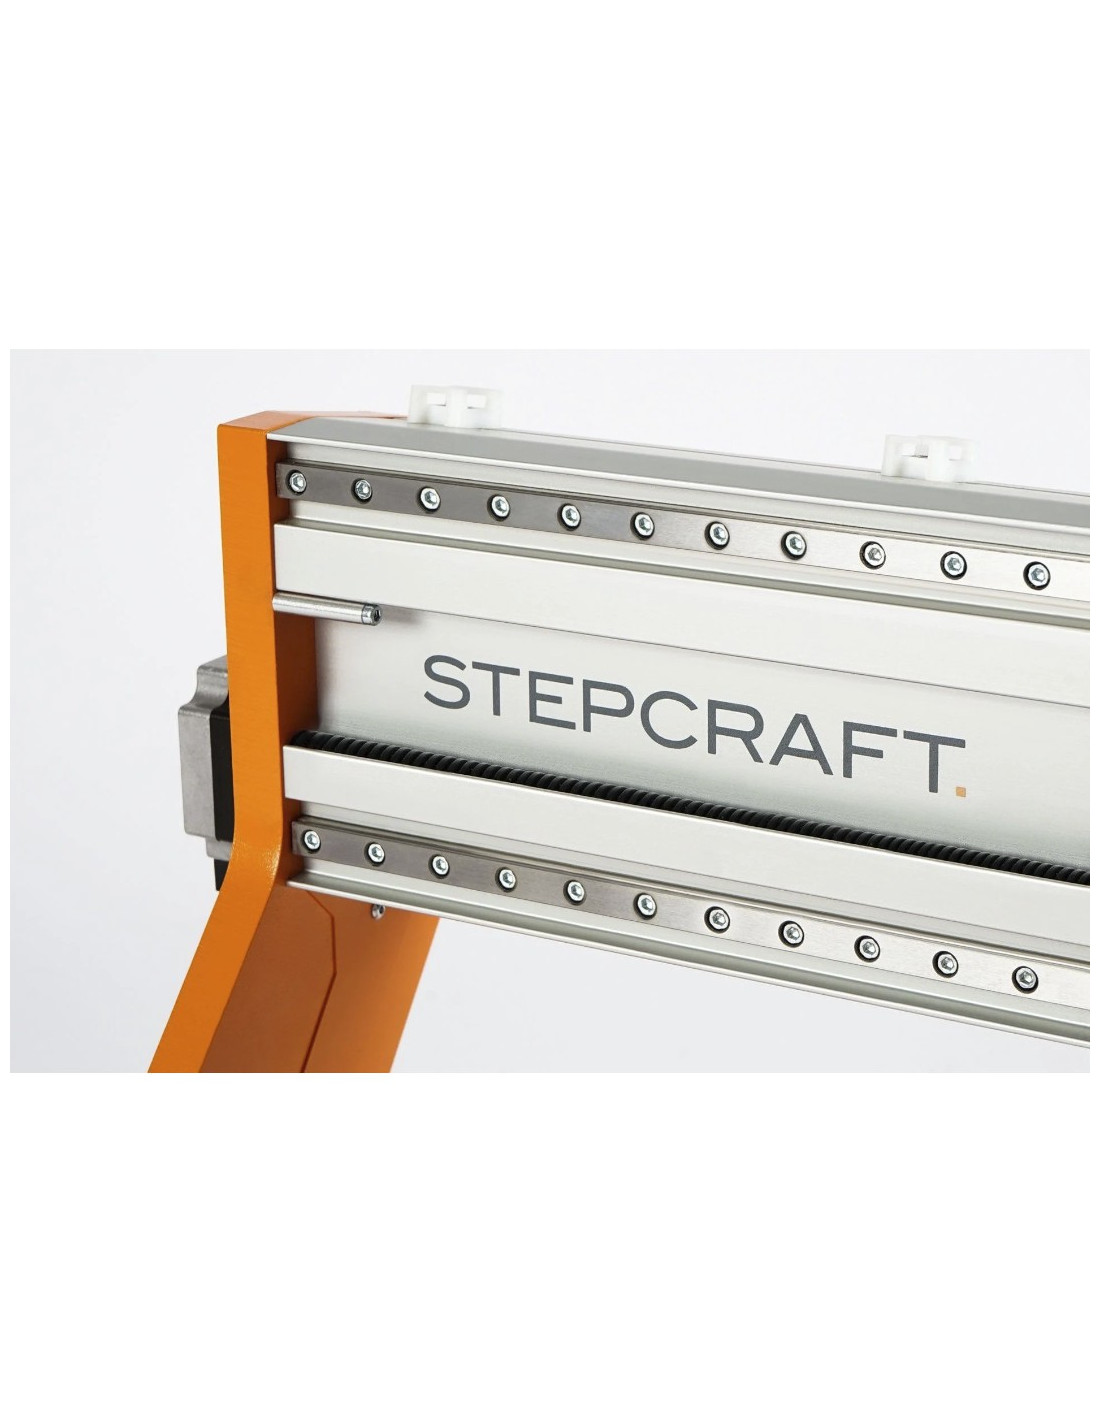 CNC milling machine - STEPCRAFT construction kit - M.1000